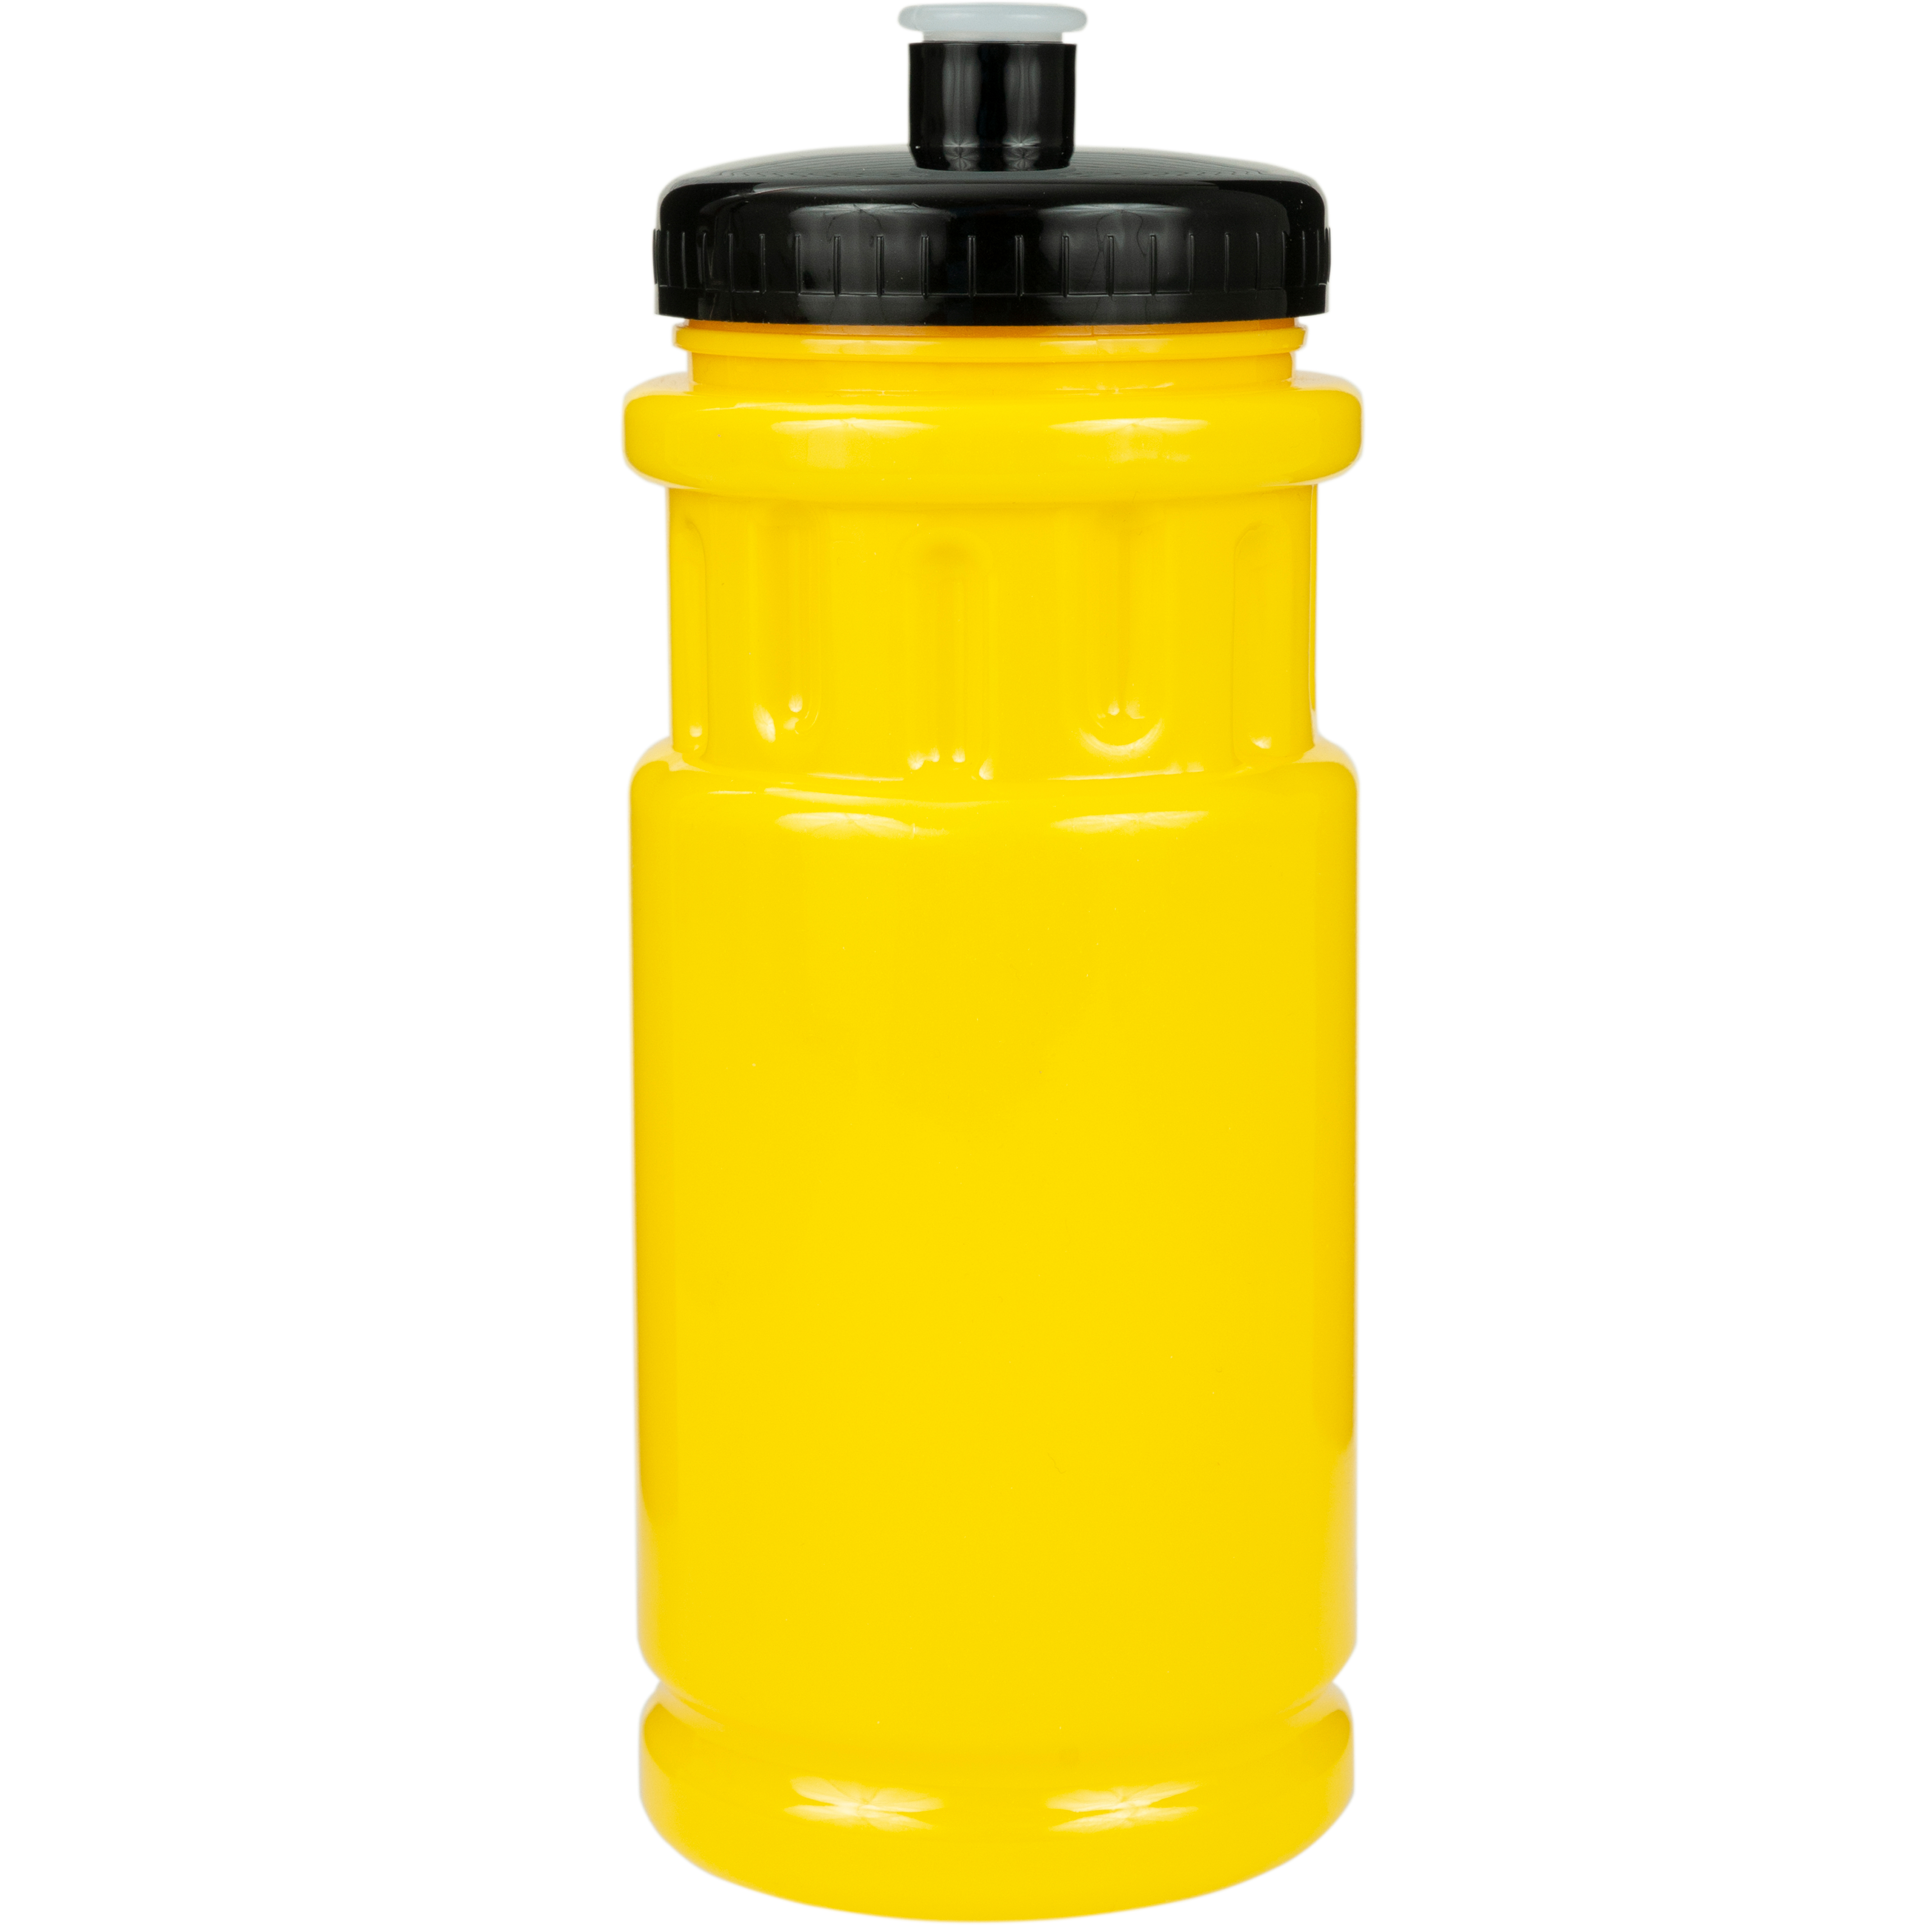 20 Yellow Sports Water Bottles, 750ml bottles